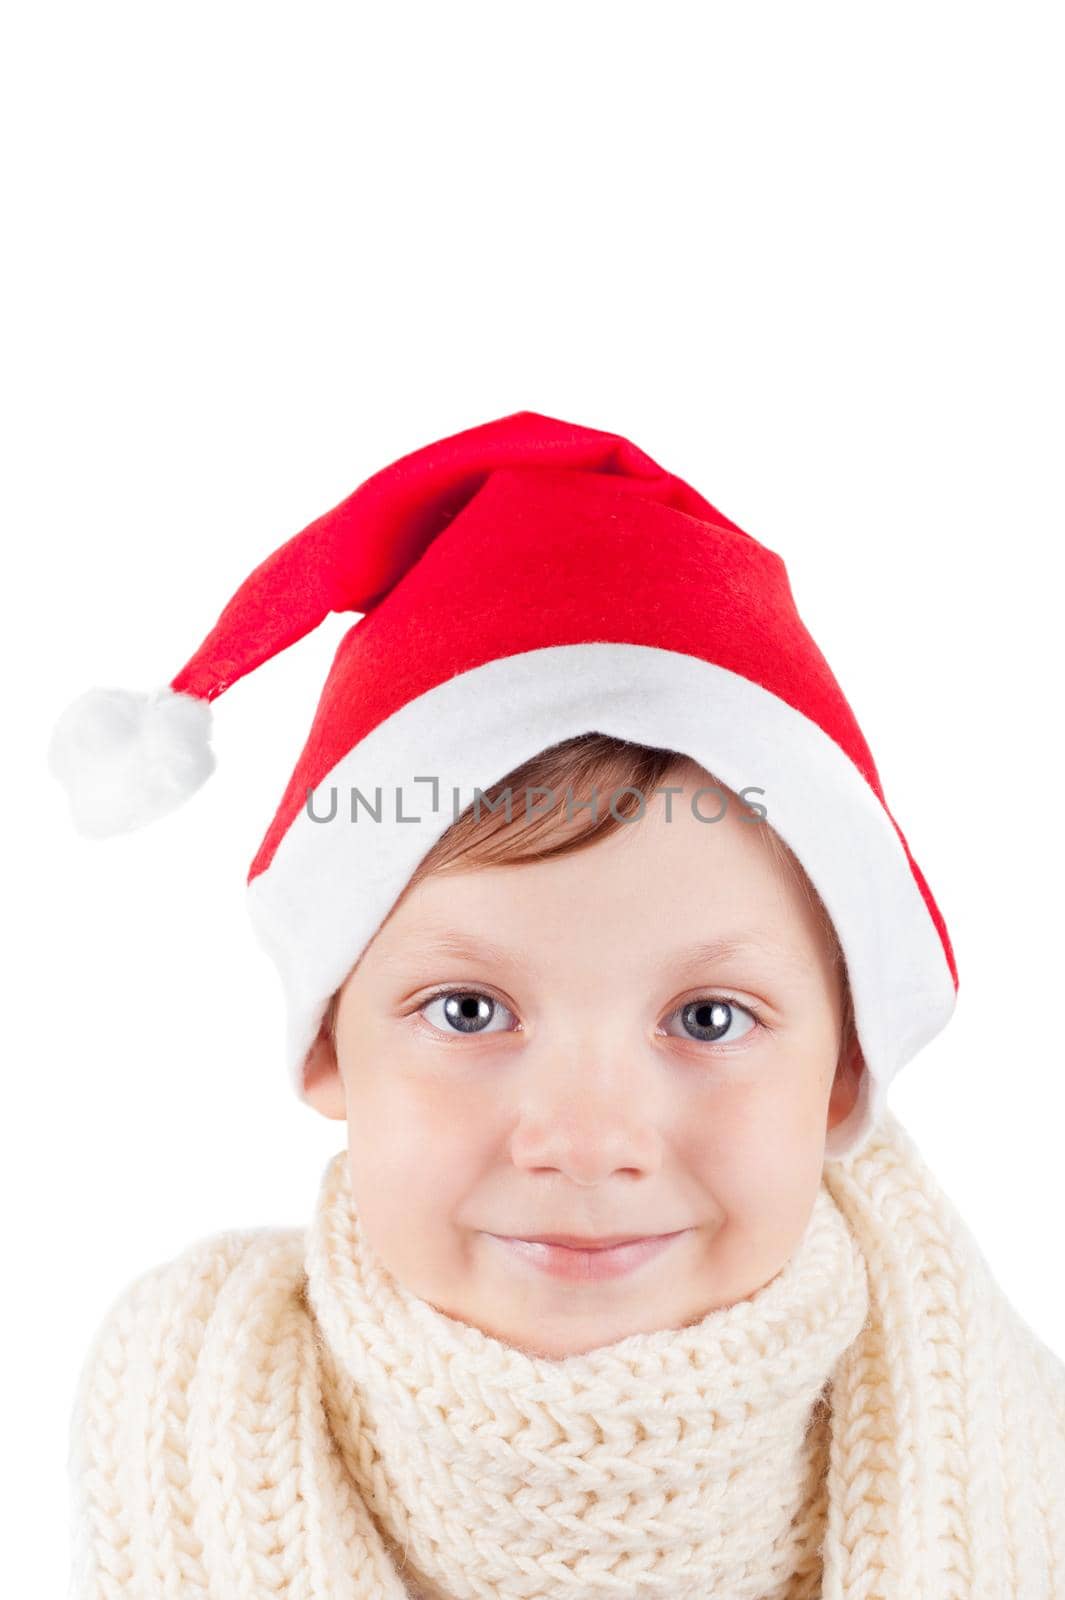 cute little boy wearing Santa Claus cap